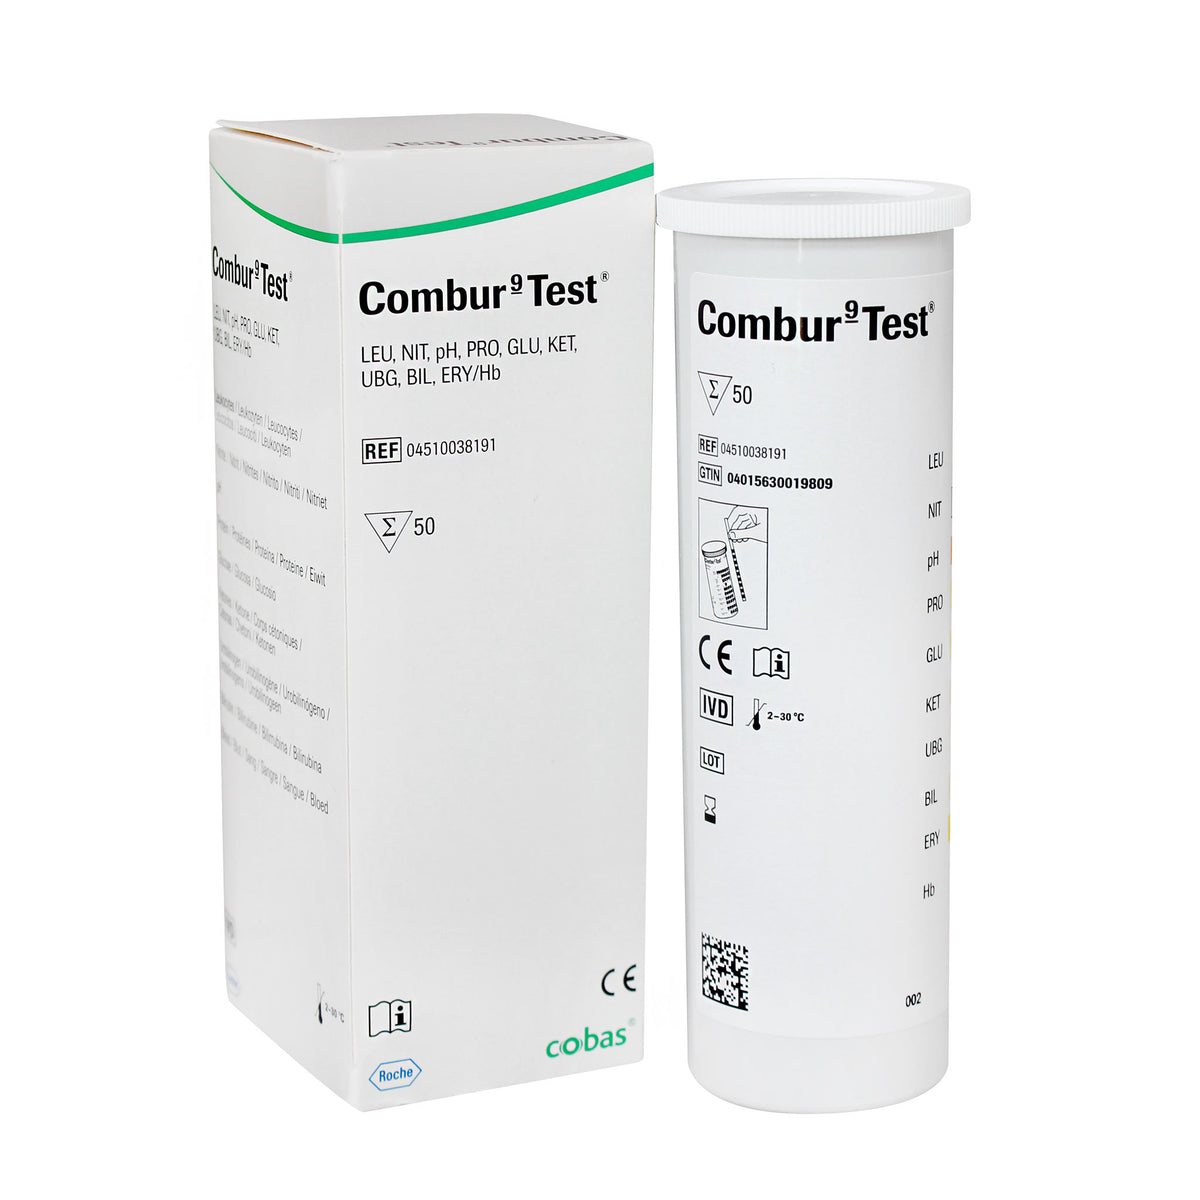 Combur 9 Urine Test Strips (50 pack)